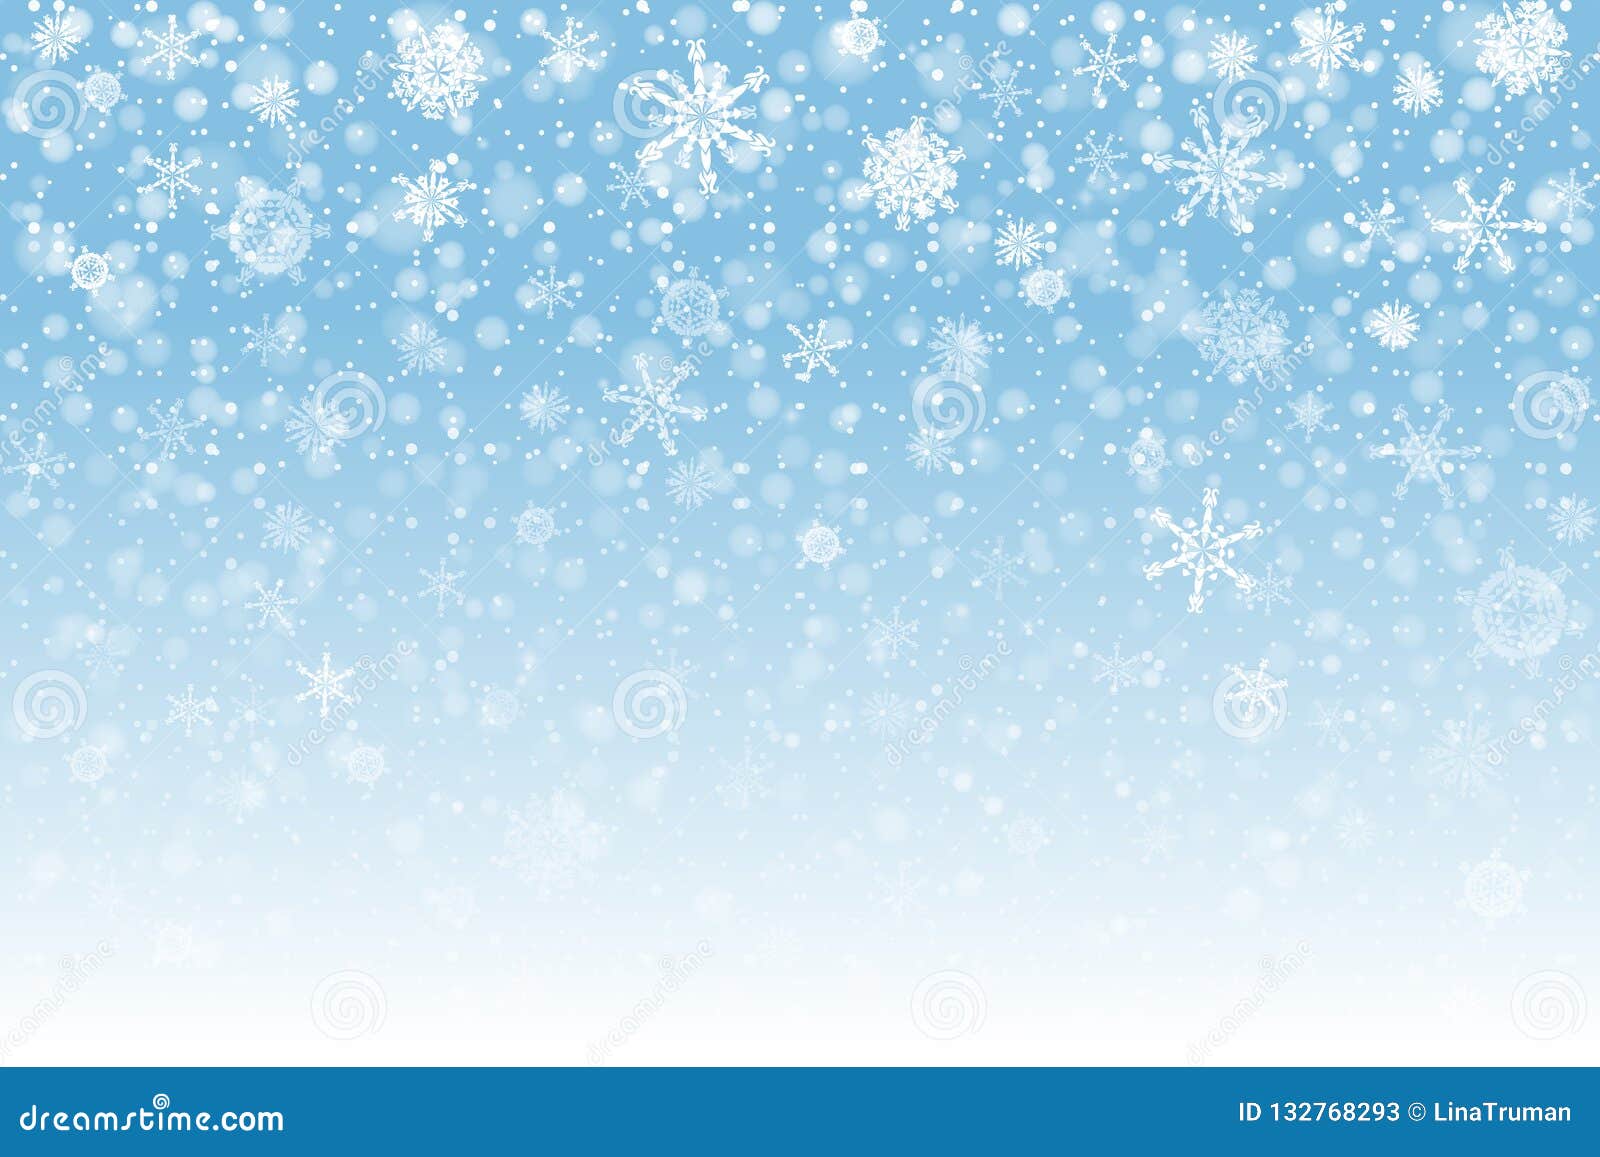 christmas snow. falling snowflakes on light background. snowfall